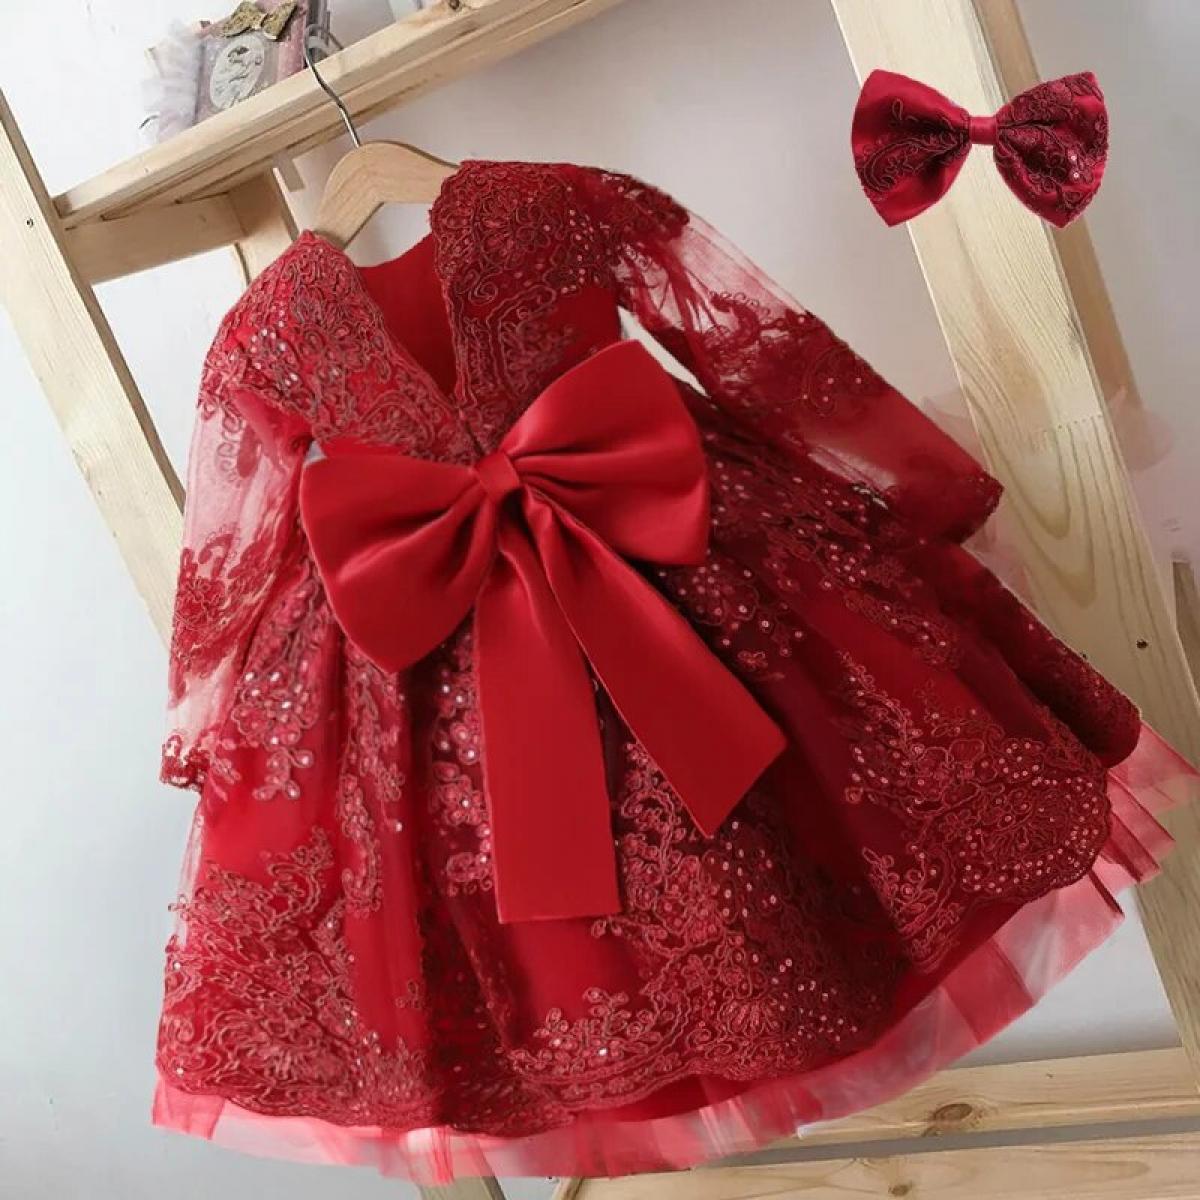 Toddler Girl Red Christmas Dress Kids Birthday Party  Gown Elegant Girls Backless Dress Infant Lace Full Sleeve Formal C